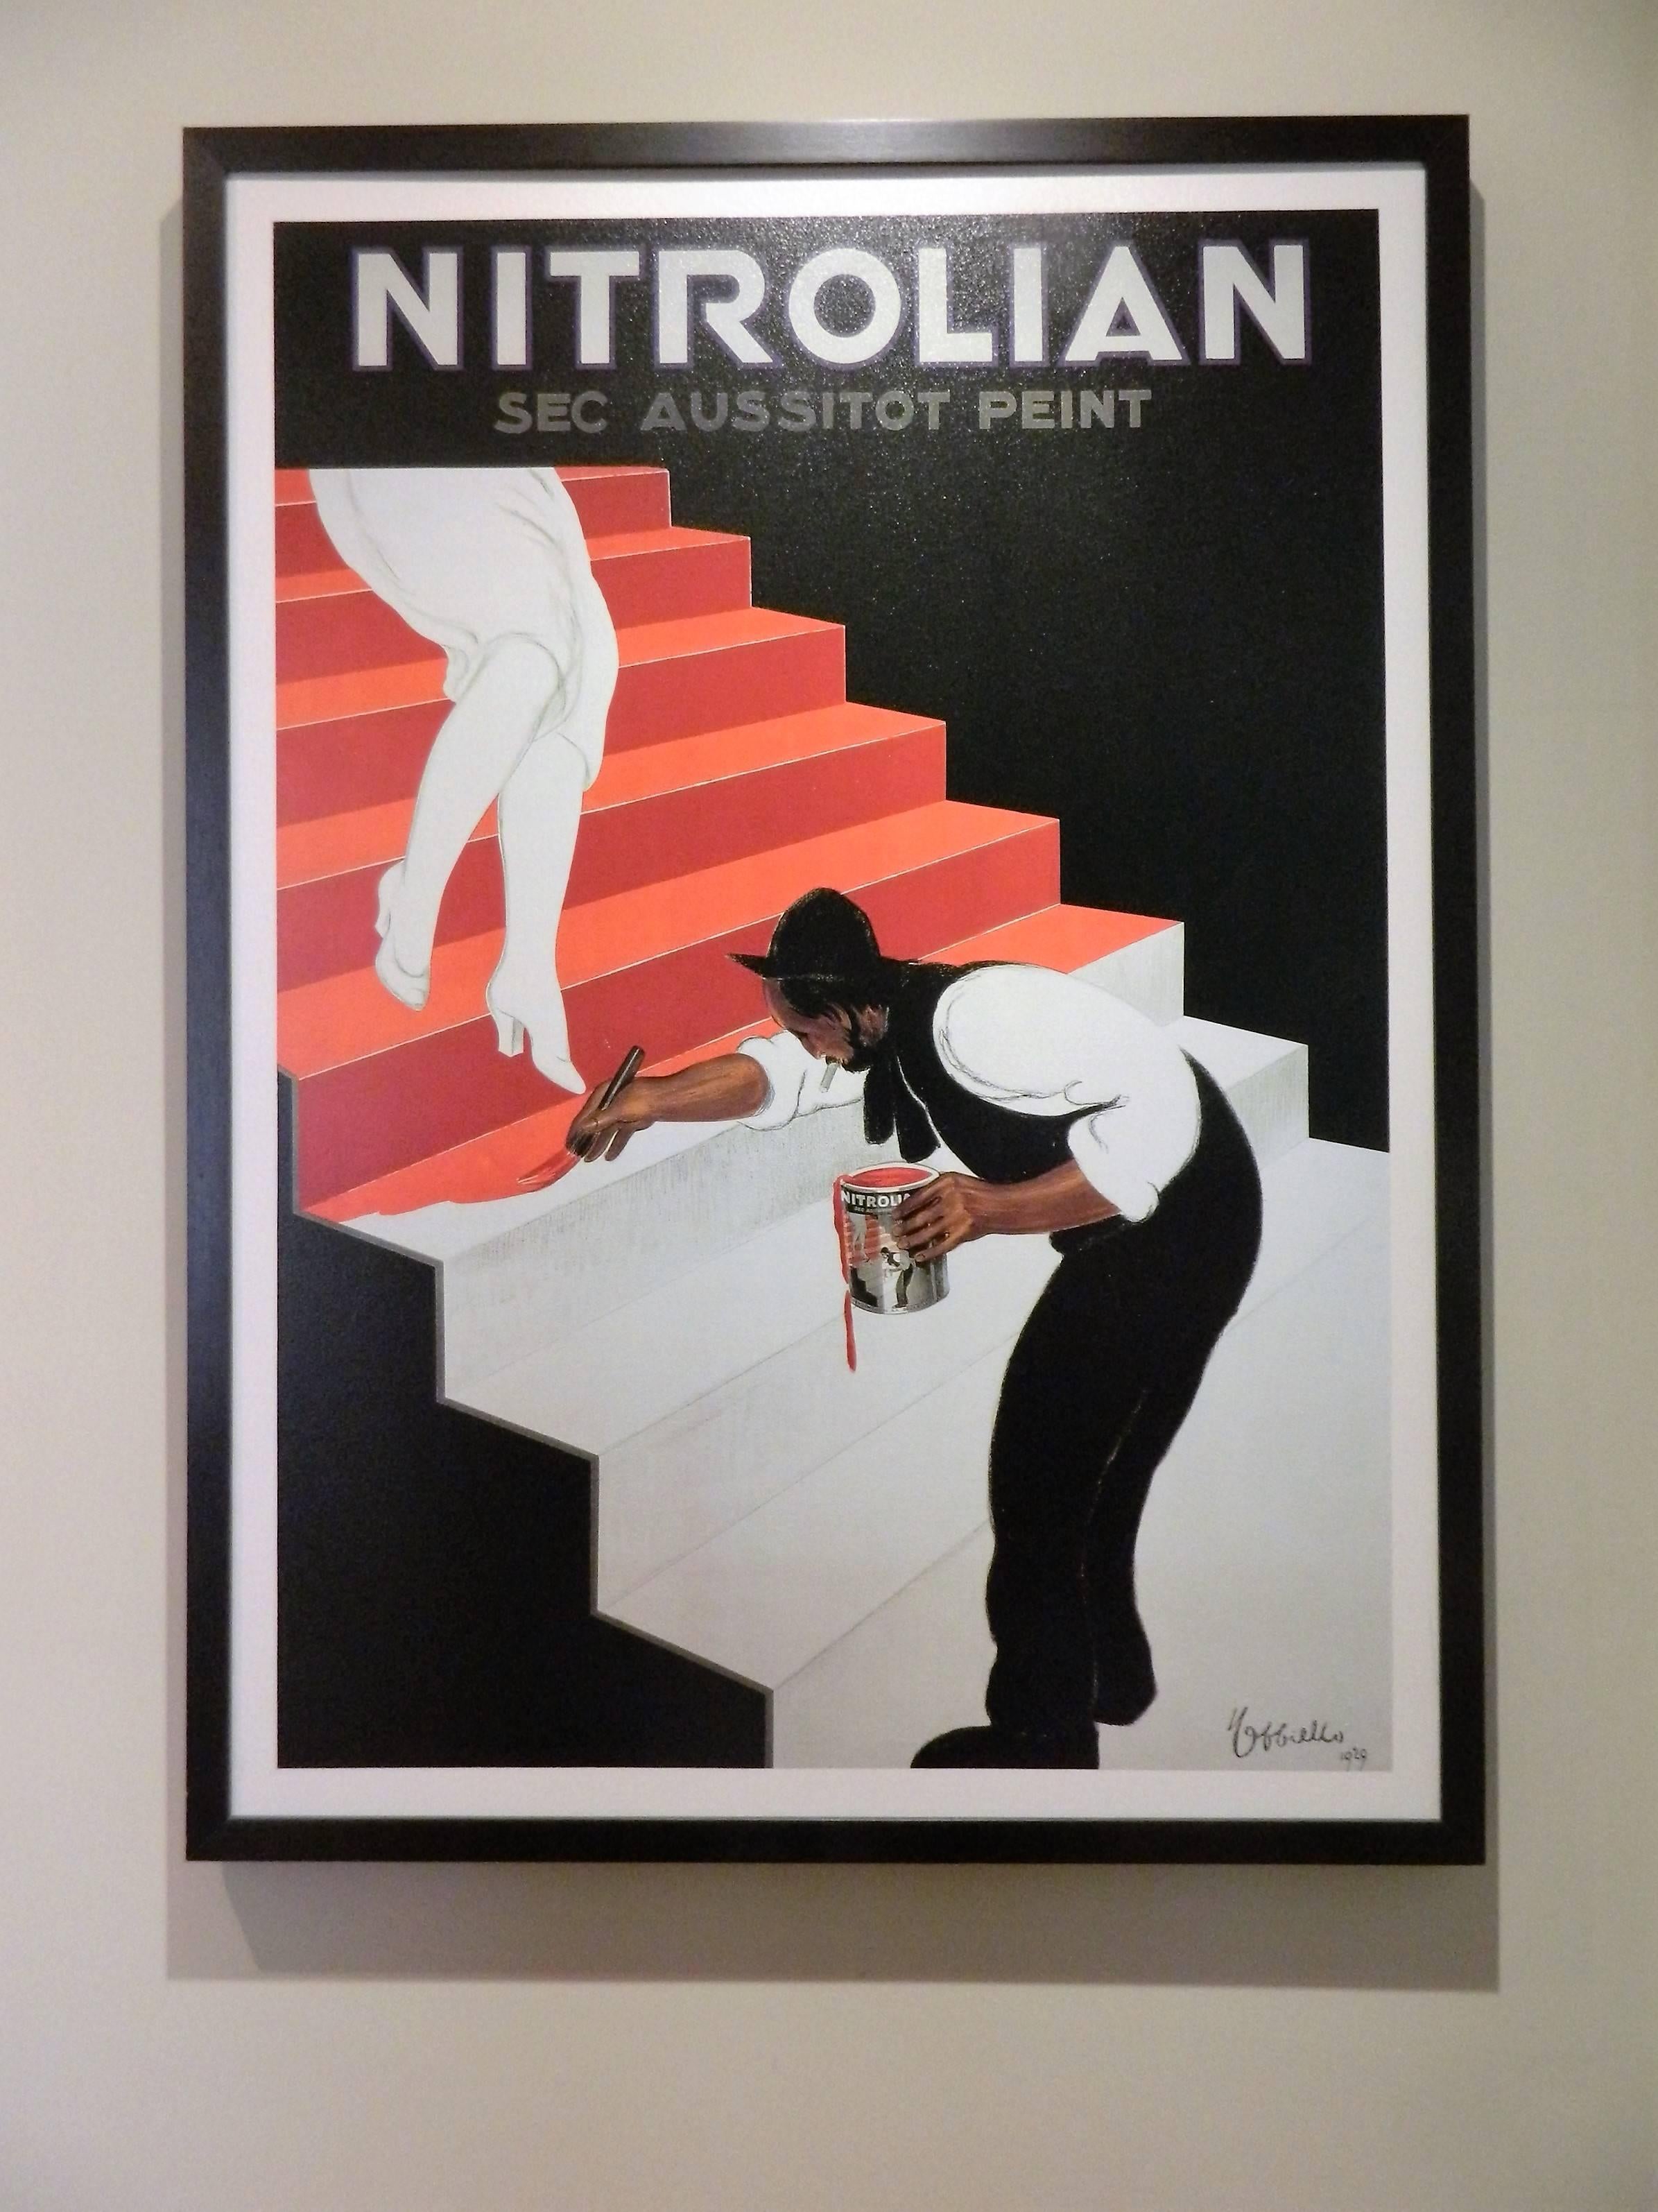 Framed giclee print of nitrolian, 20th century.